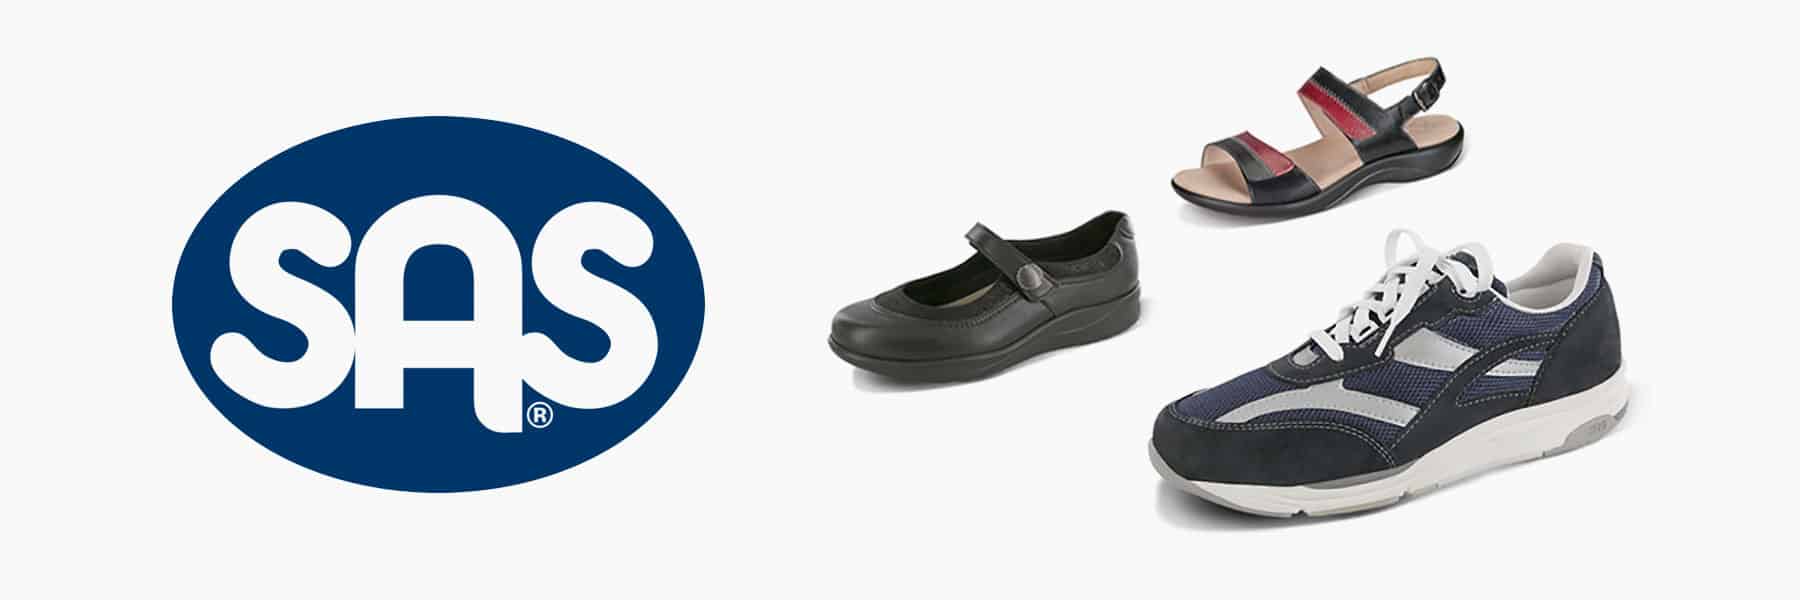 SAS Shoes Logo - SAS Shoes, SAS Shoes for Women, SAS Shoes for Men